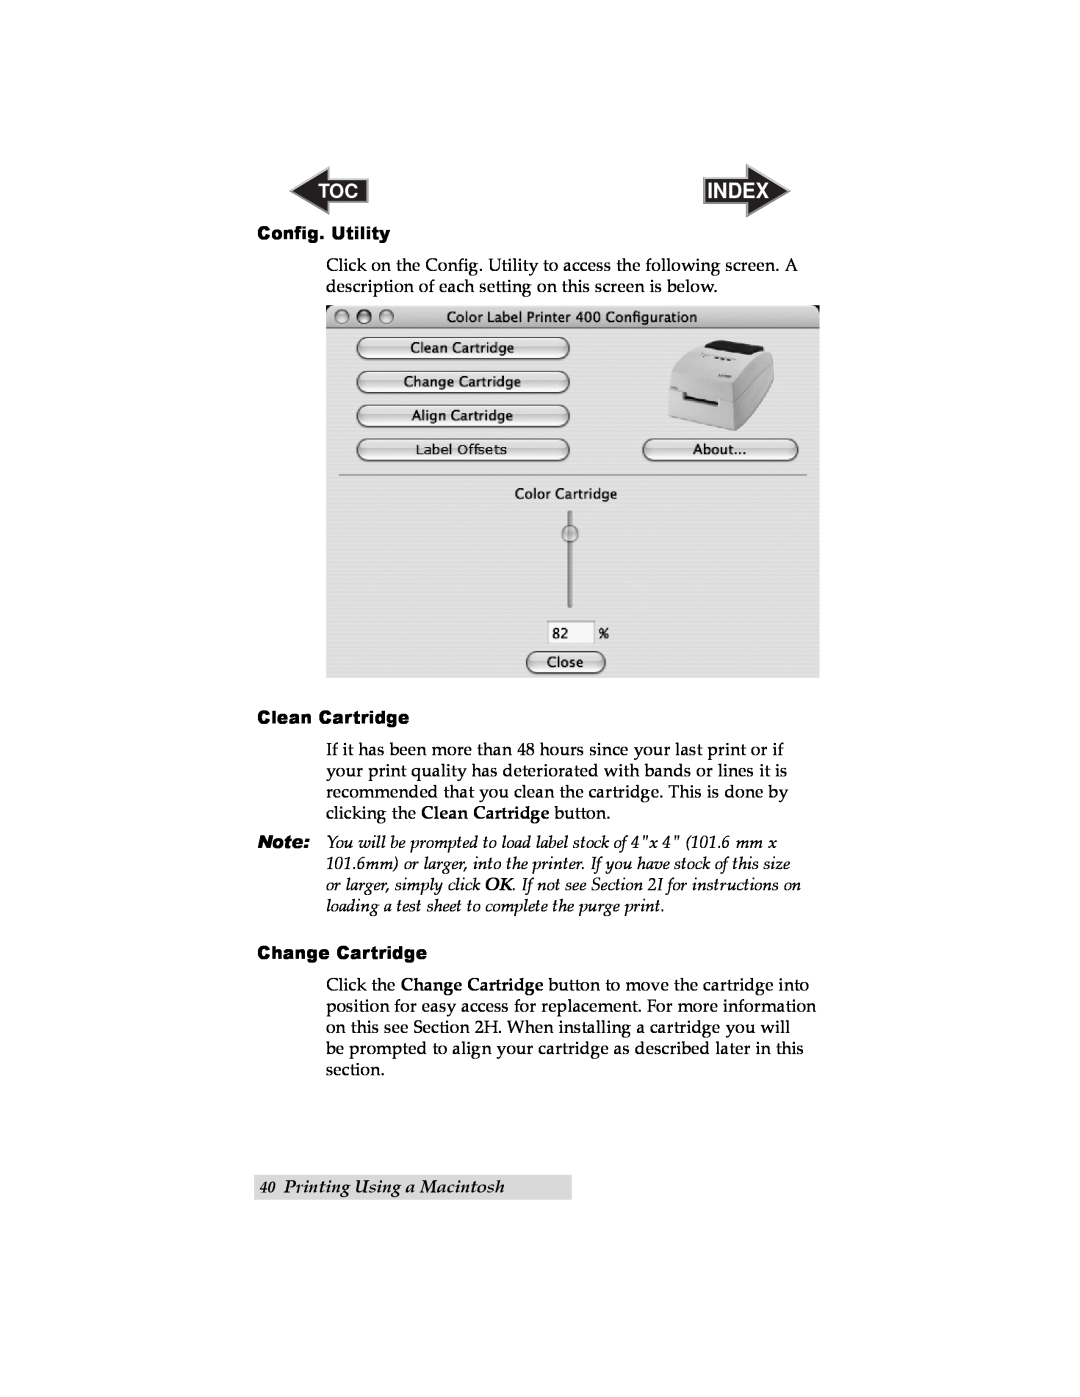 Primera Technology LX400 user manual Config. Utility, Clean Cartridge, Printing Using a Macintosh, Index, Change Cartridge 